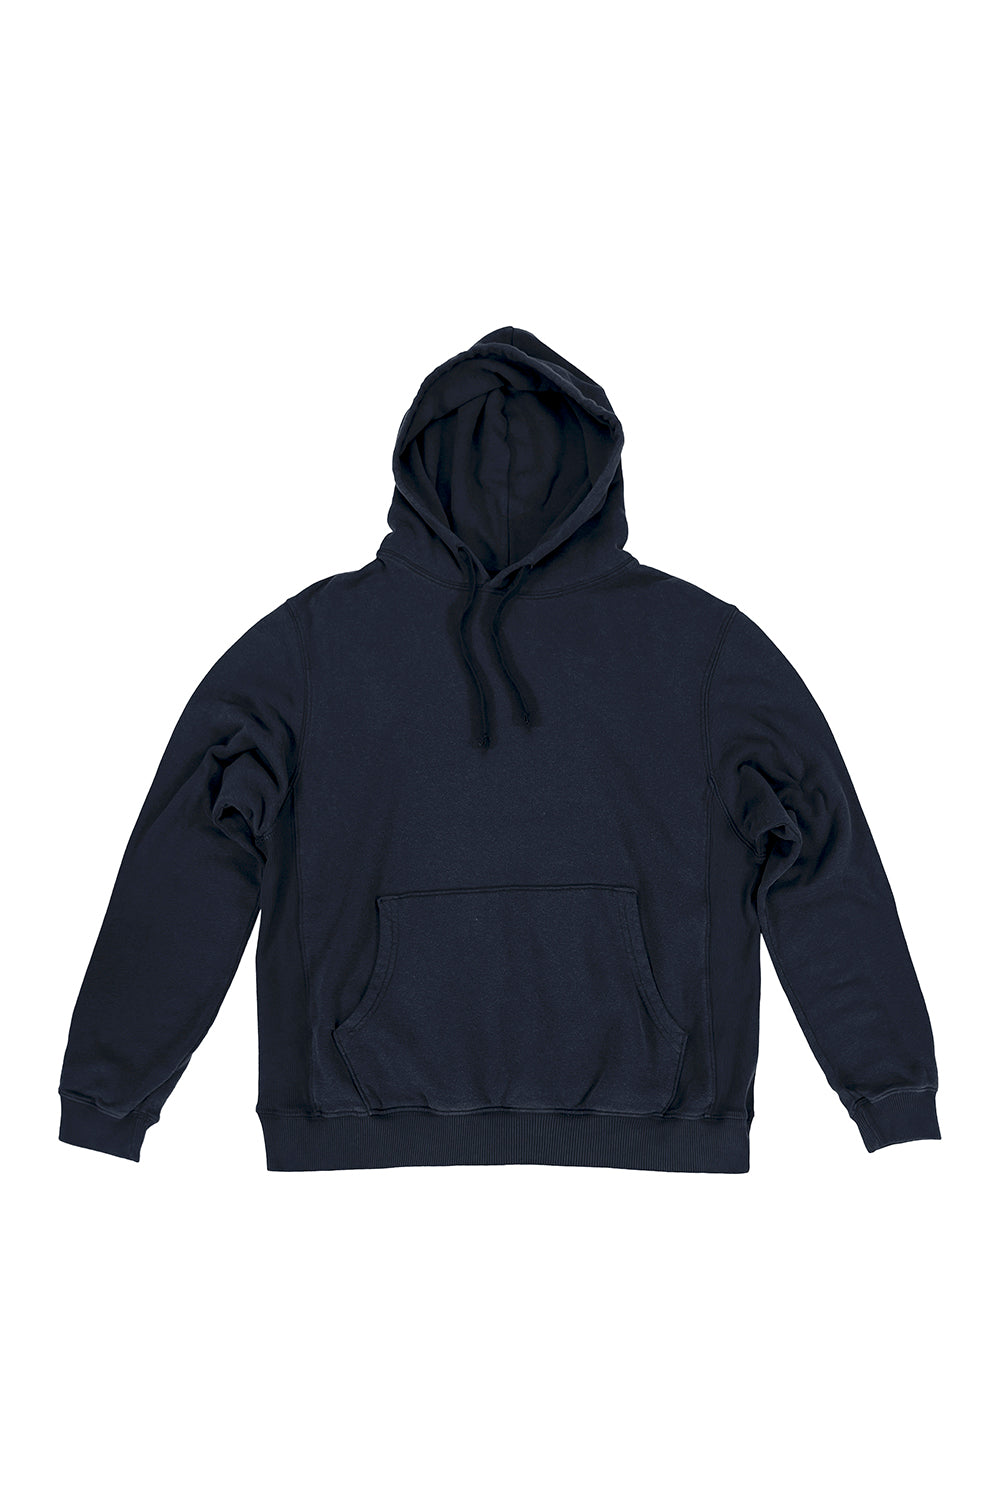 Montauk Hooded Sweatshirt | Jungmaven Hemp Clothing & Accessories / Color: Black